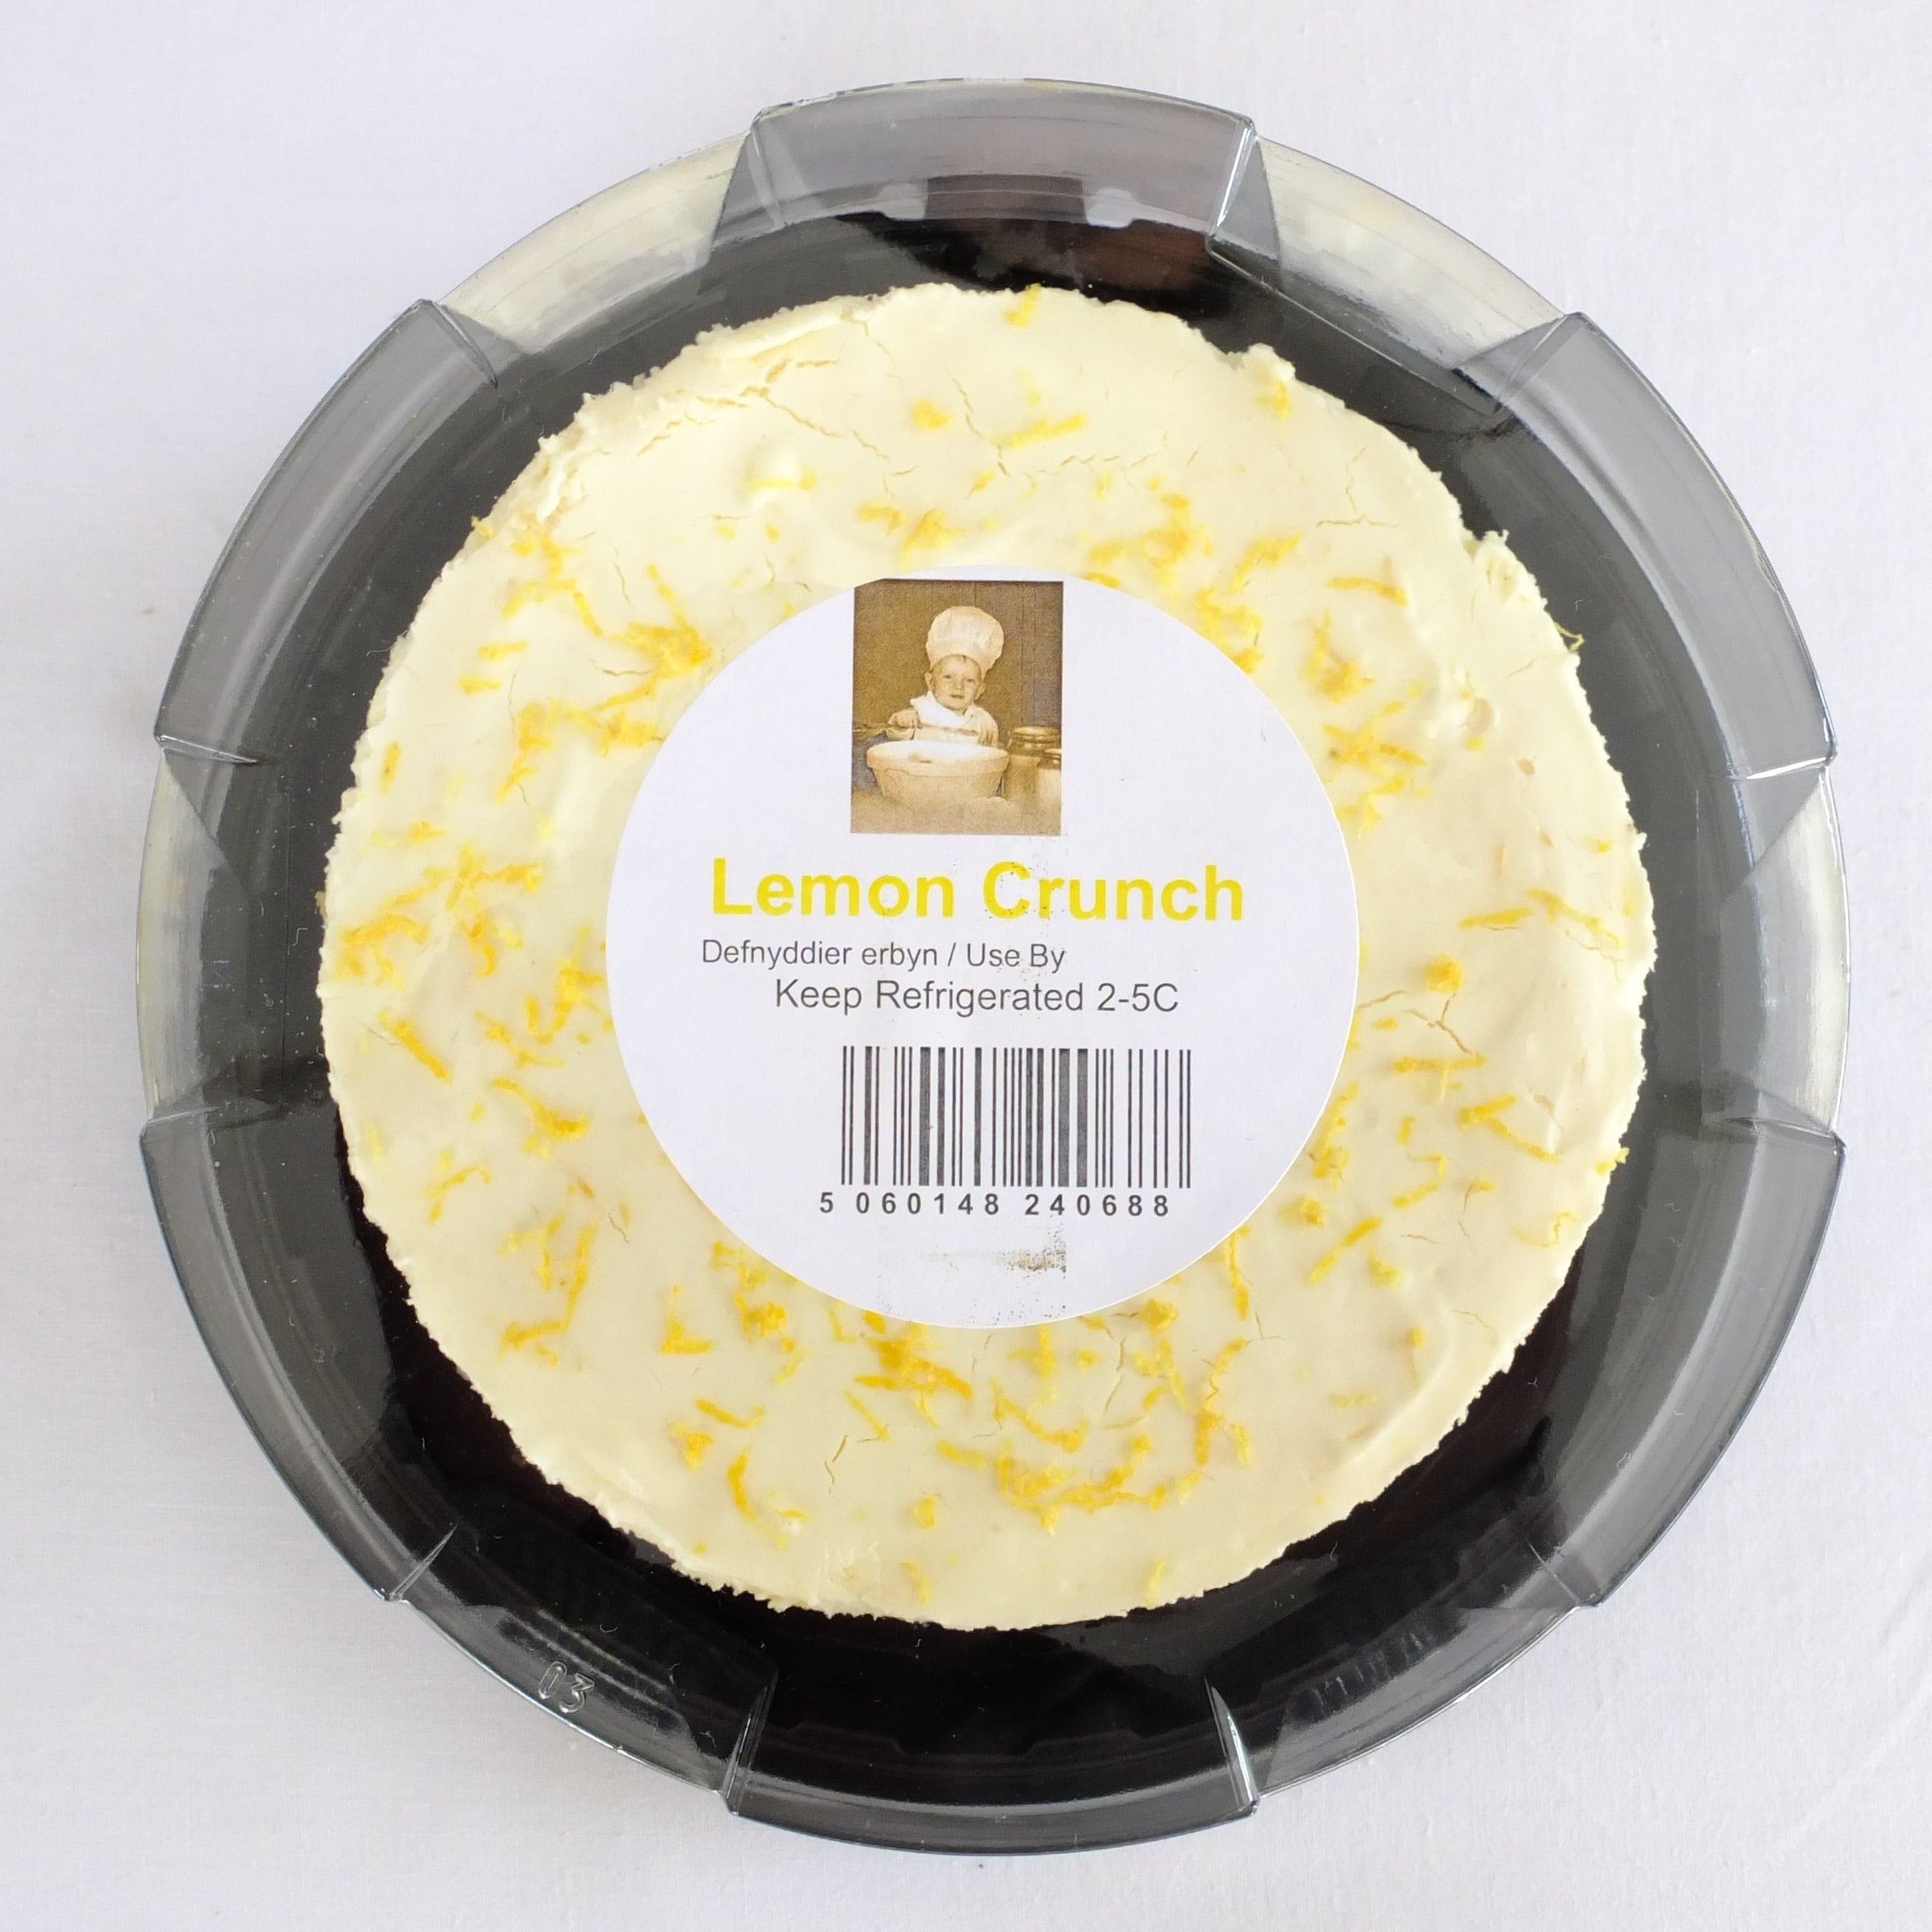 Lemon Crunch Cake | Meek's Sweet Trap